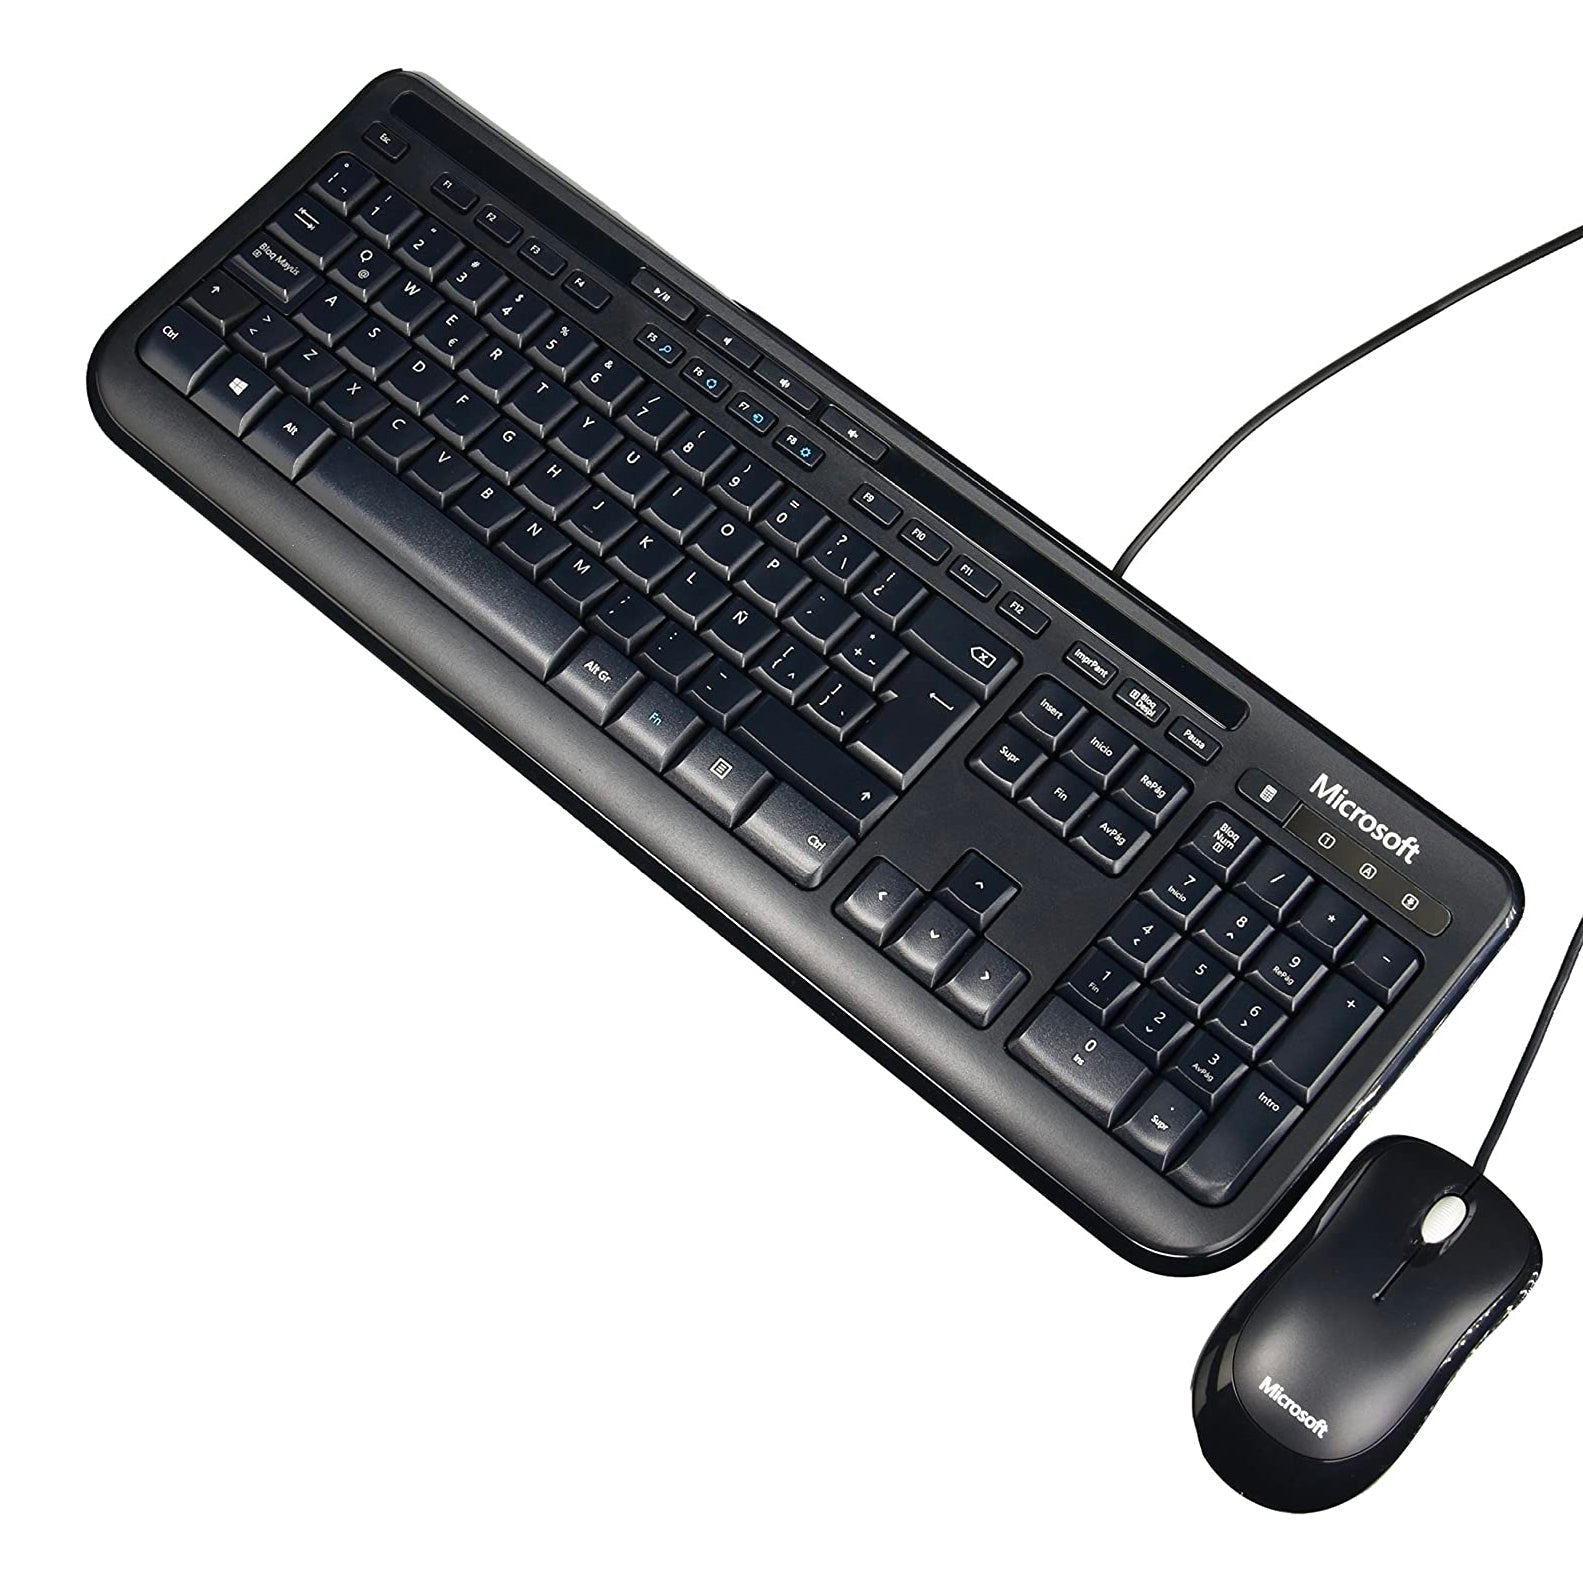 Teclado y Mouse Microsoft Wired Keyboard 600 APB-00004